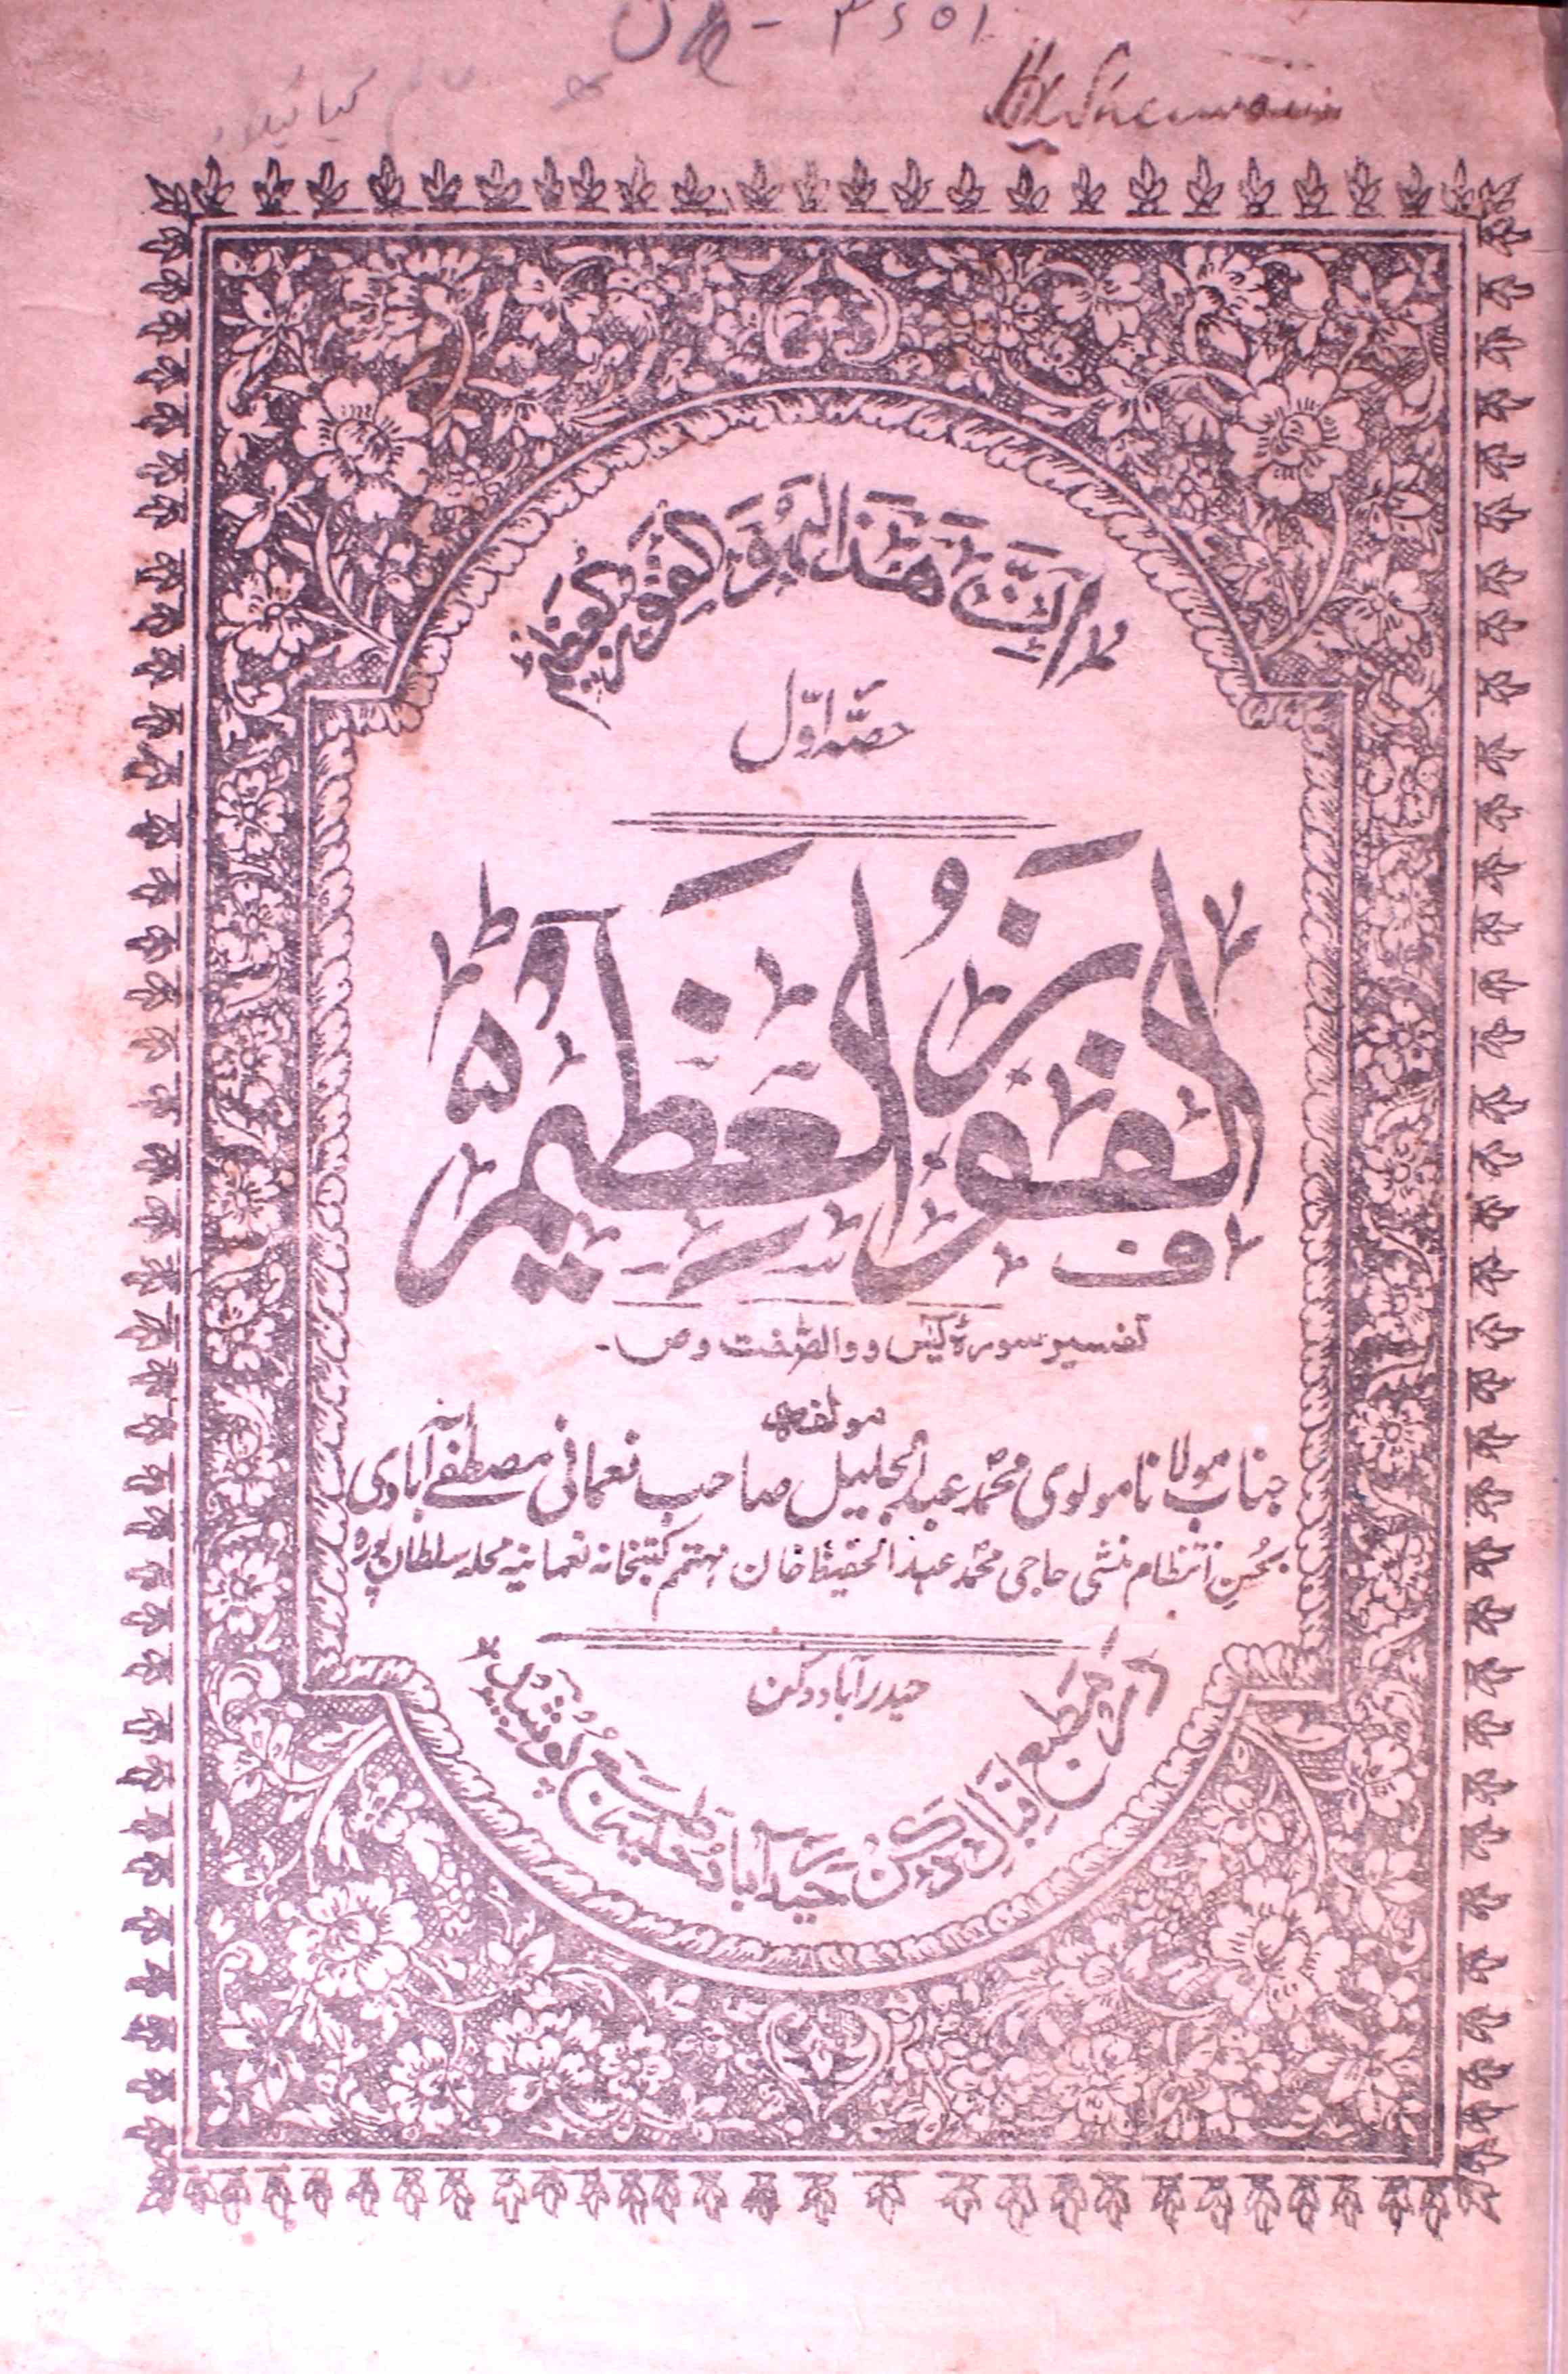 Al-Fauzul-Azeem